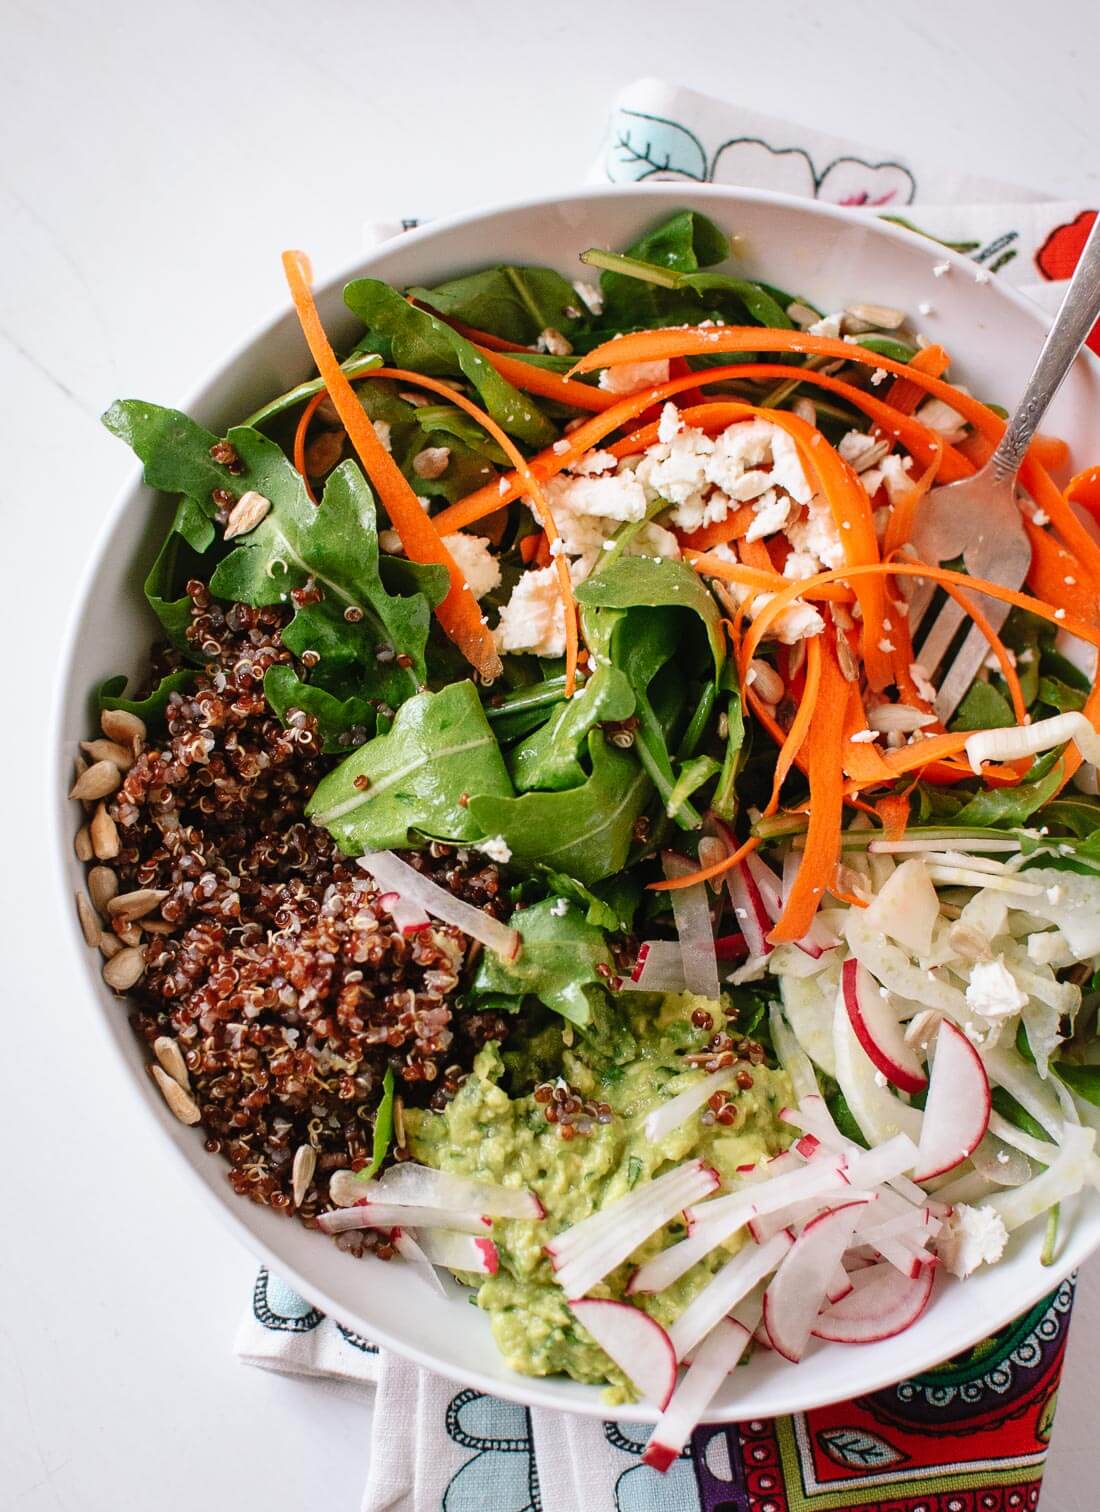 A fresh and filling spring salad, featuring arugula, carrots, quinoa and avocado - cookieandkate.com